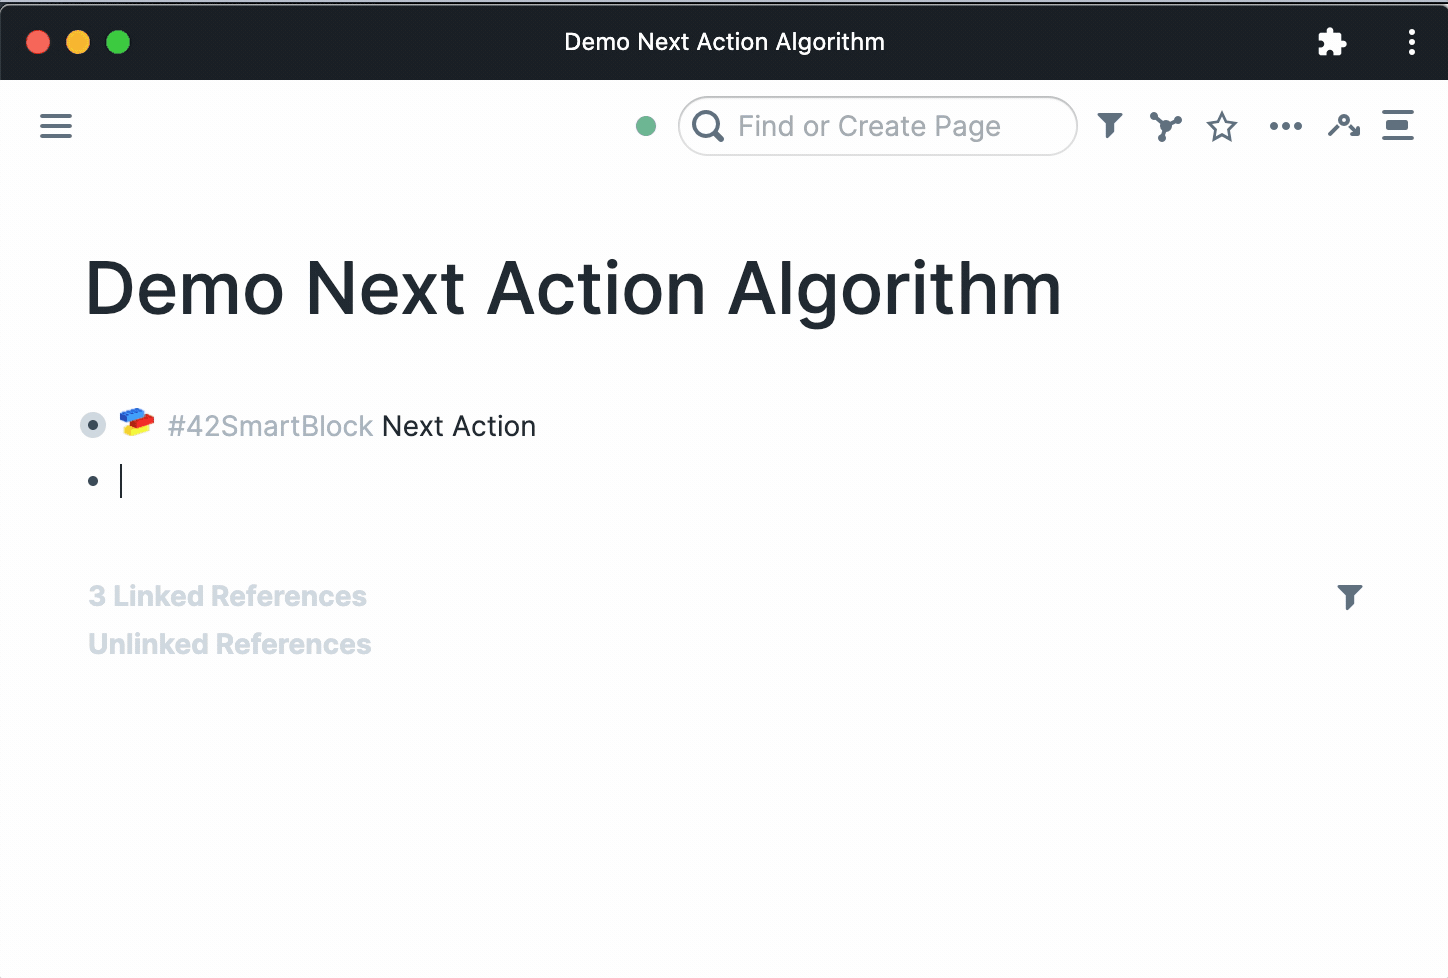 Next Action Algorithm Demo